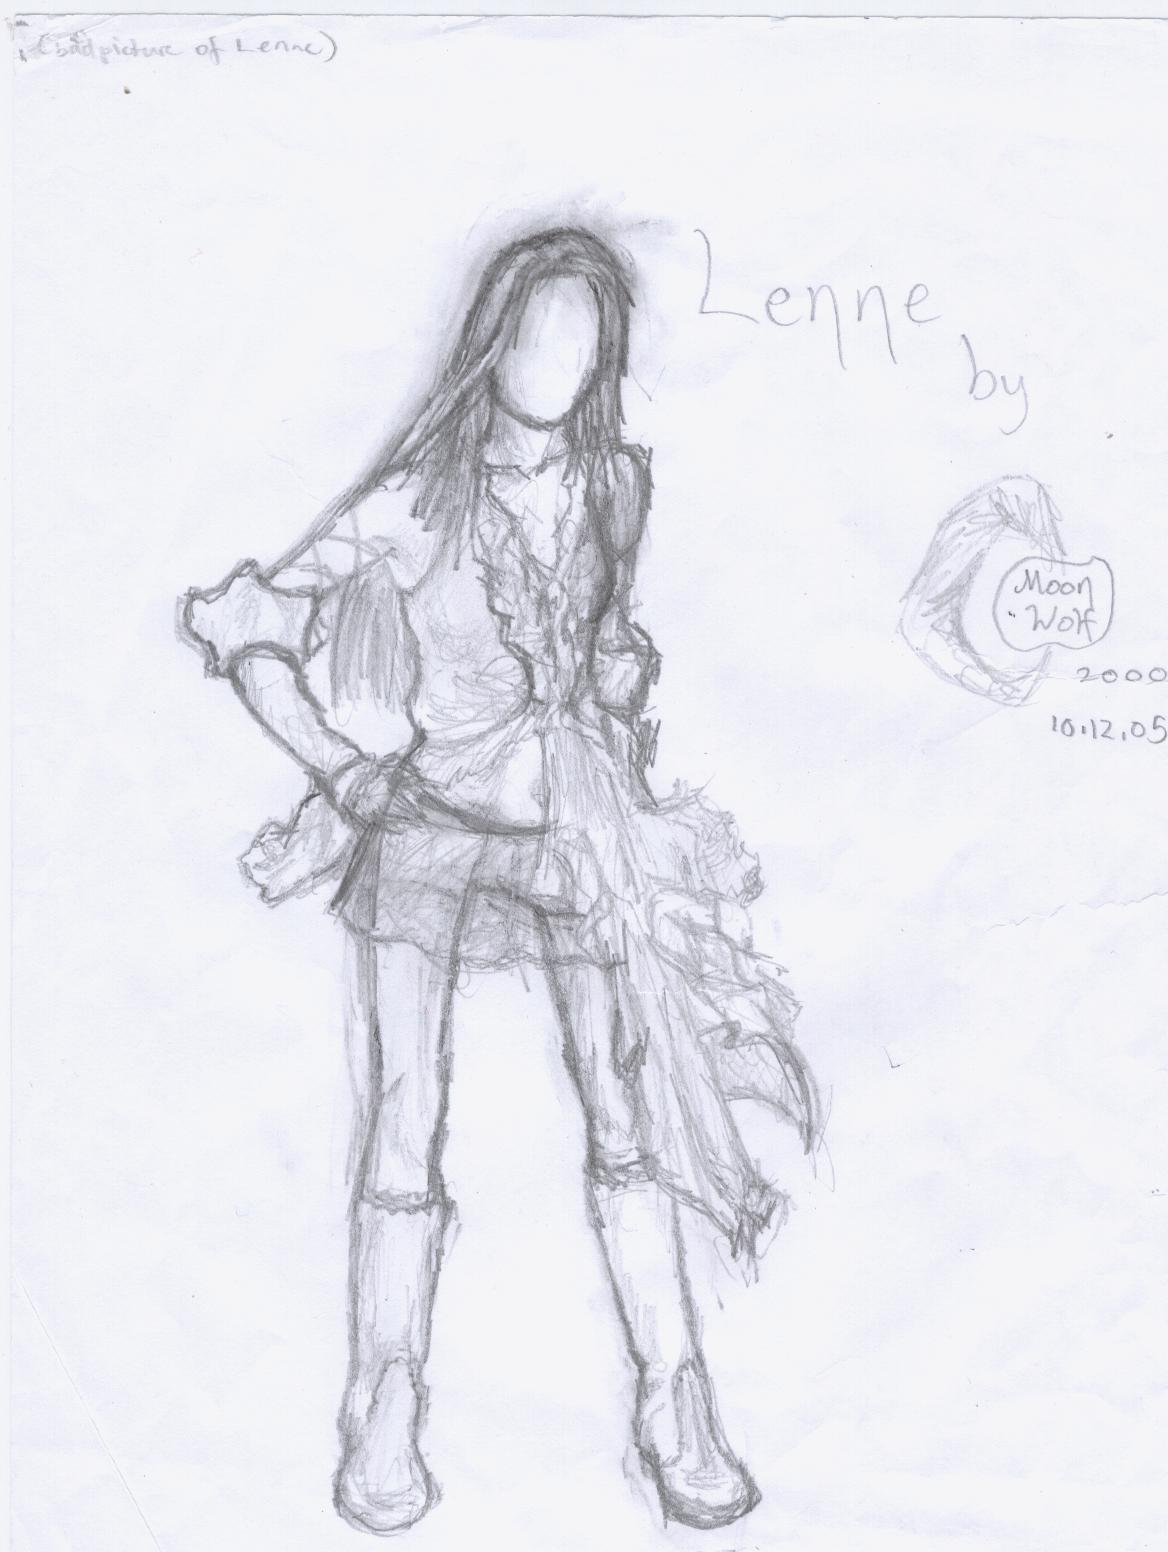 Lenne sketch by MoonWolf2000